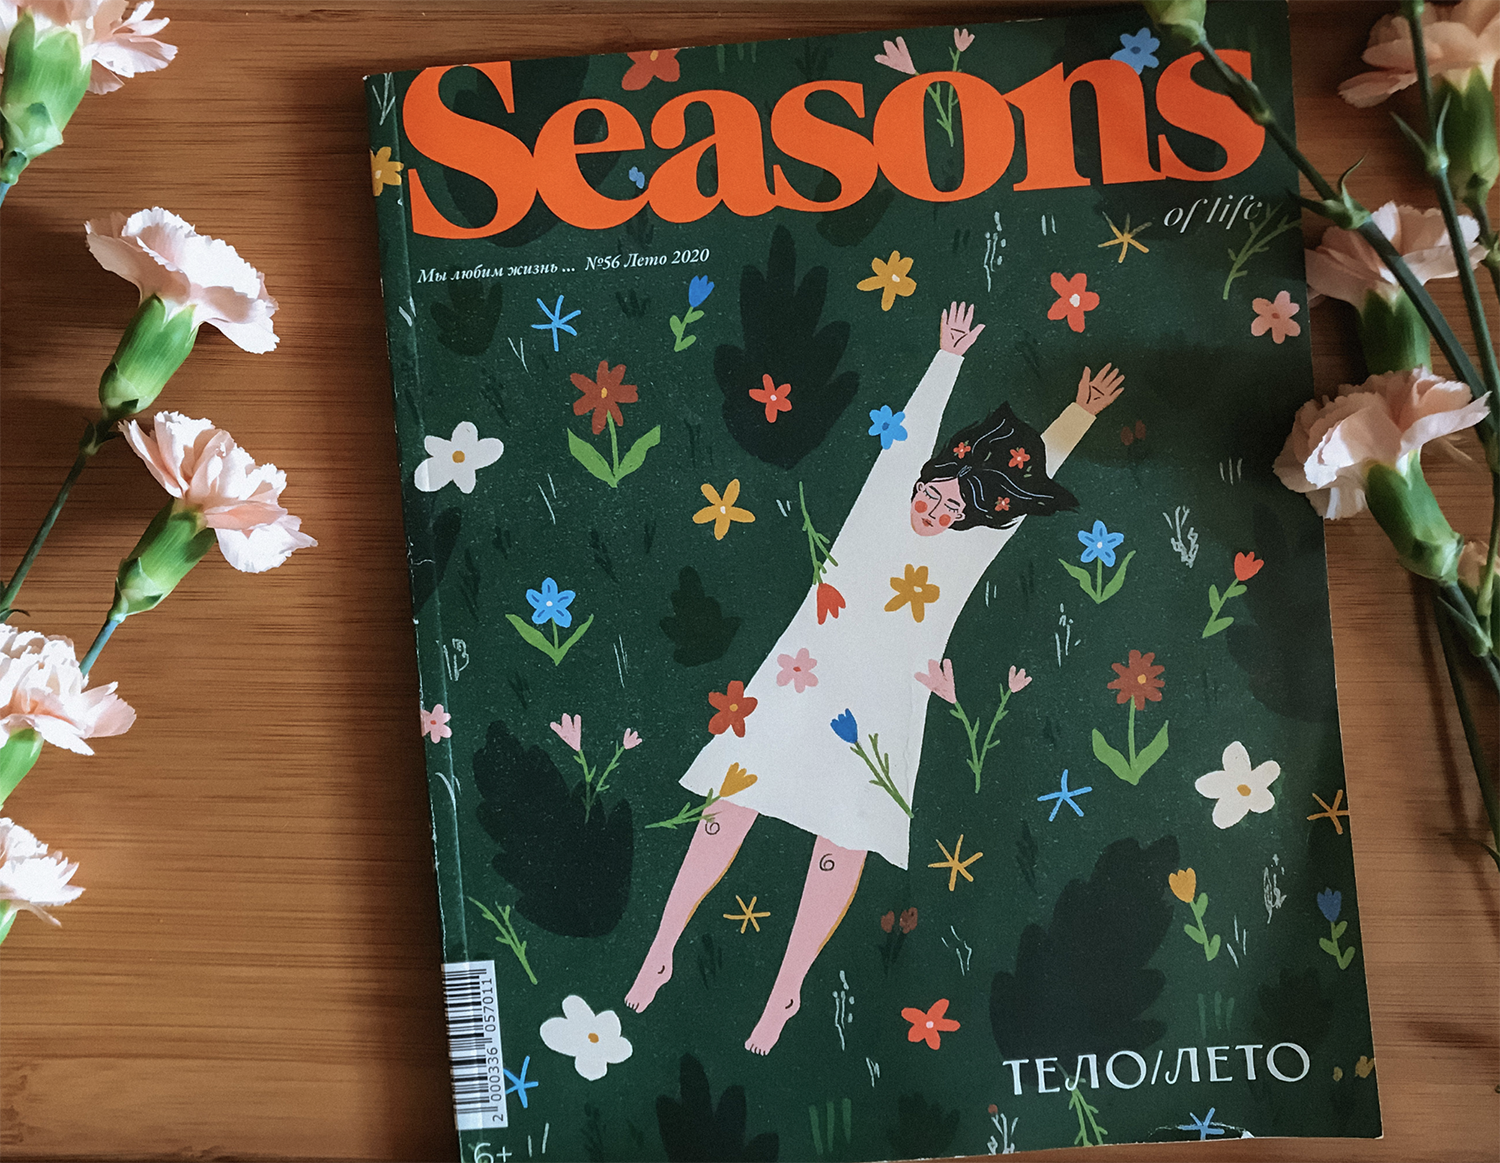 Seasons of Life журнал. Seasons журнал обложки. Еру ыуфыщты журнал. Seasons of Life разворот.